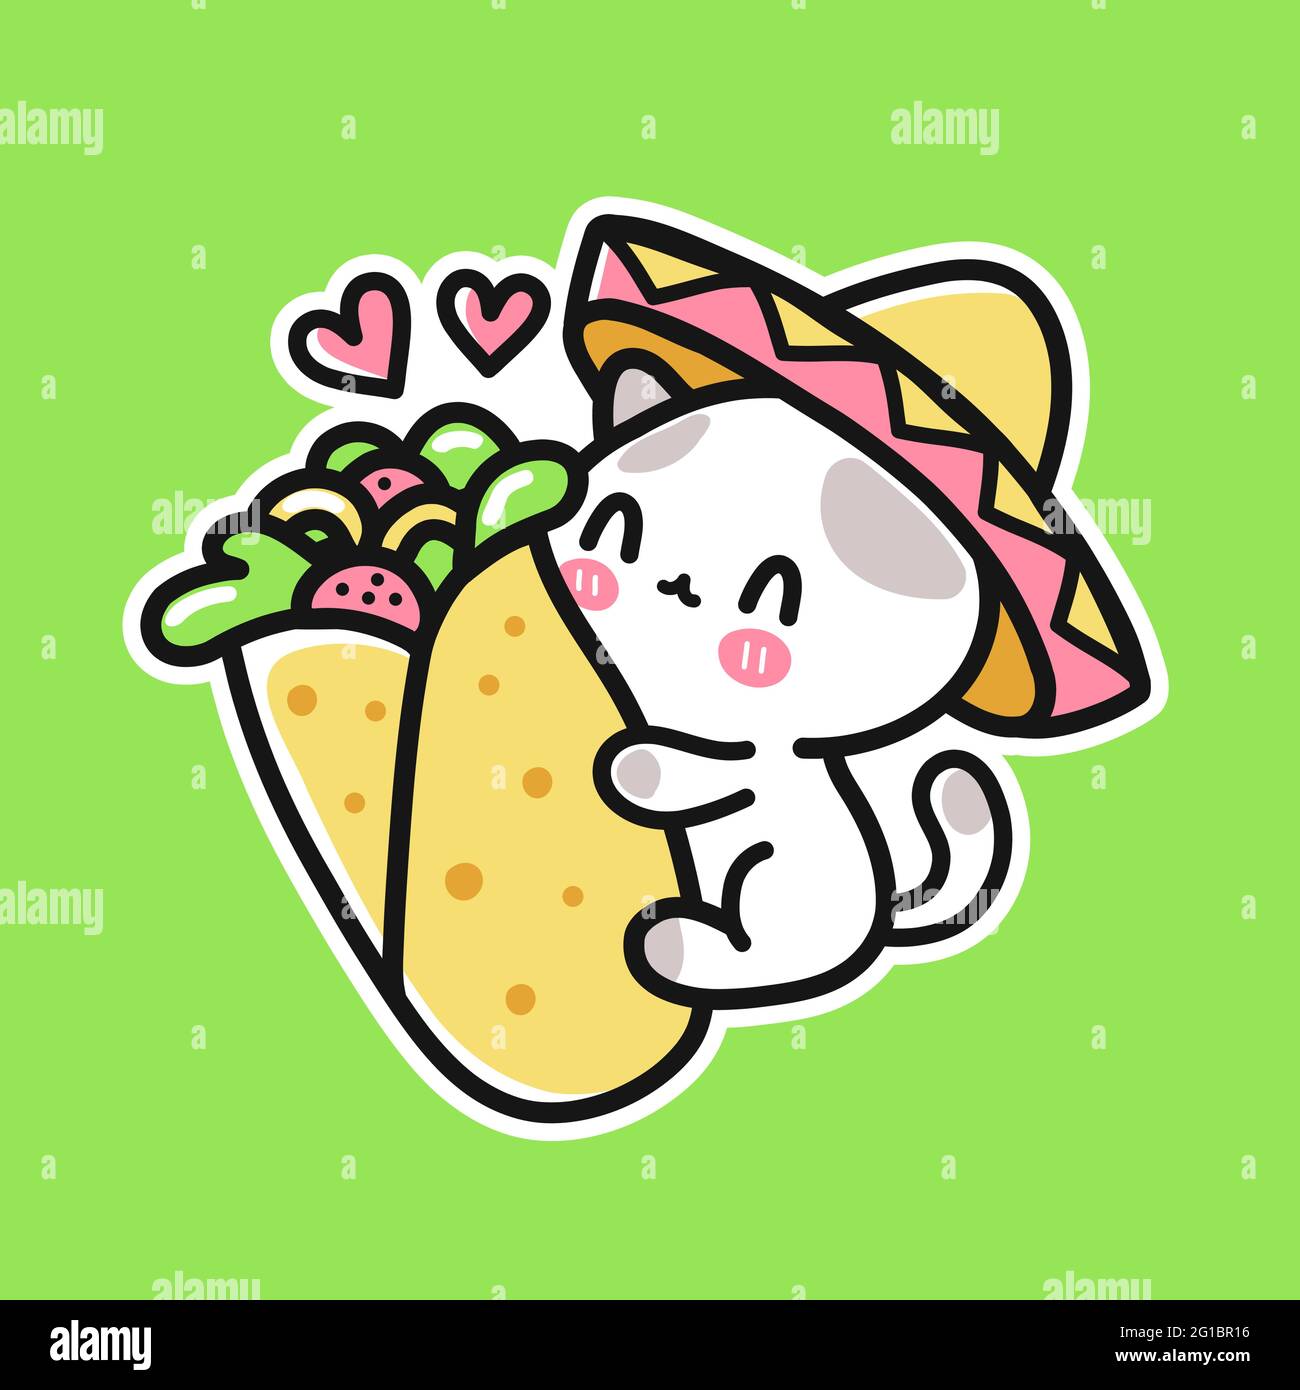 Lindo gracioso gato pequeño en el sombrero mexicano abrazos burrito. Icono  de ilustración de carácter kawaii dibujado a mano vectorial. Comida mexicana  burrito y gato caricatura, póster, camiseta concepto de impresión Imagen